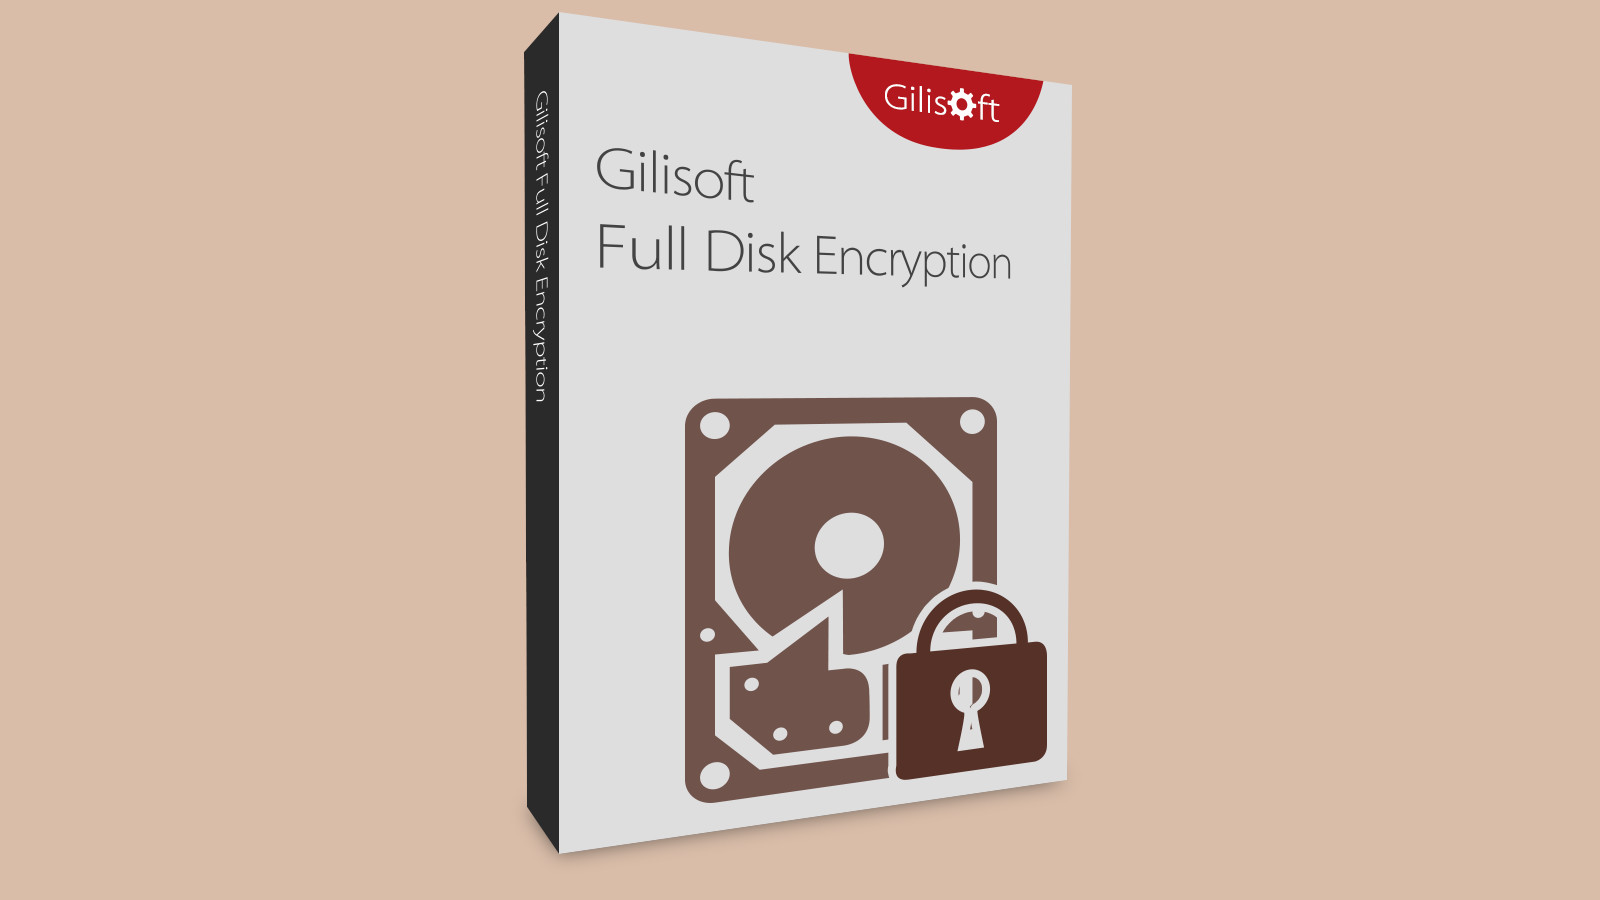 Gilisoft Full Disk Encryption CD Key [USD 19.72]